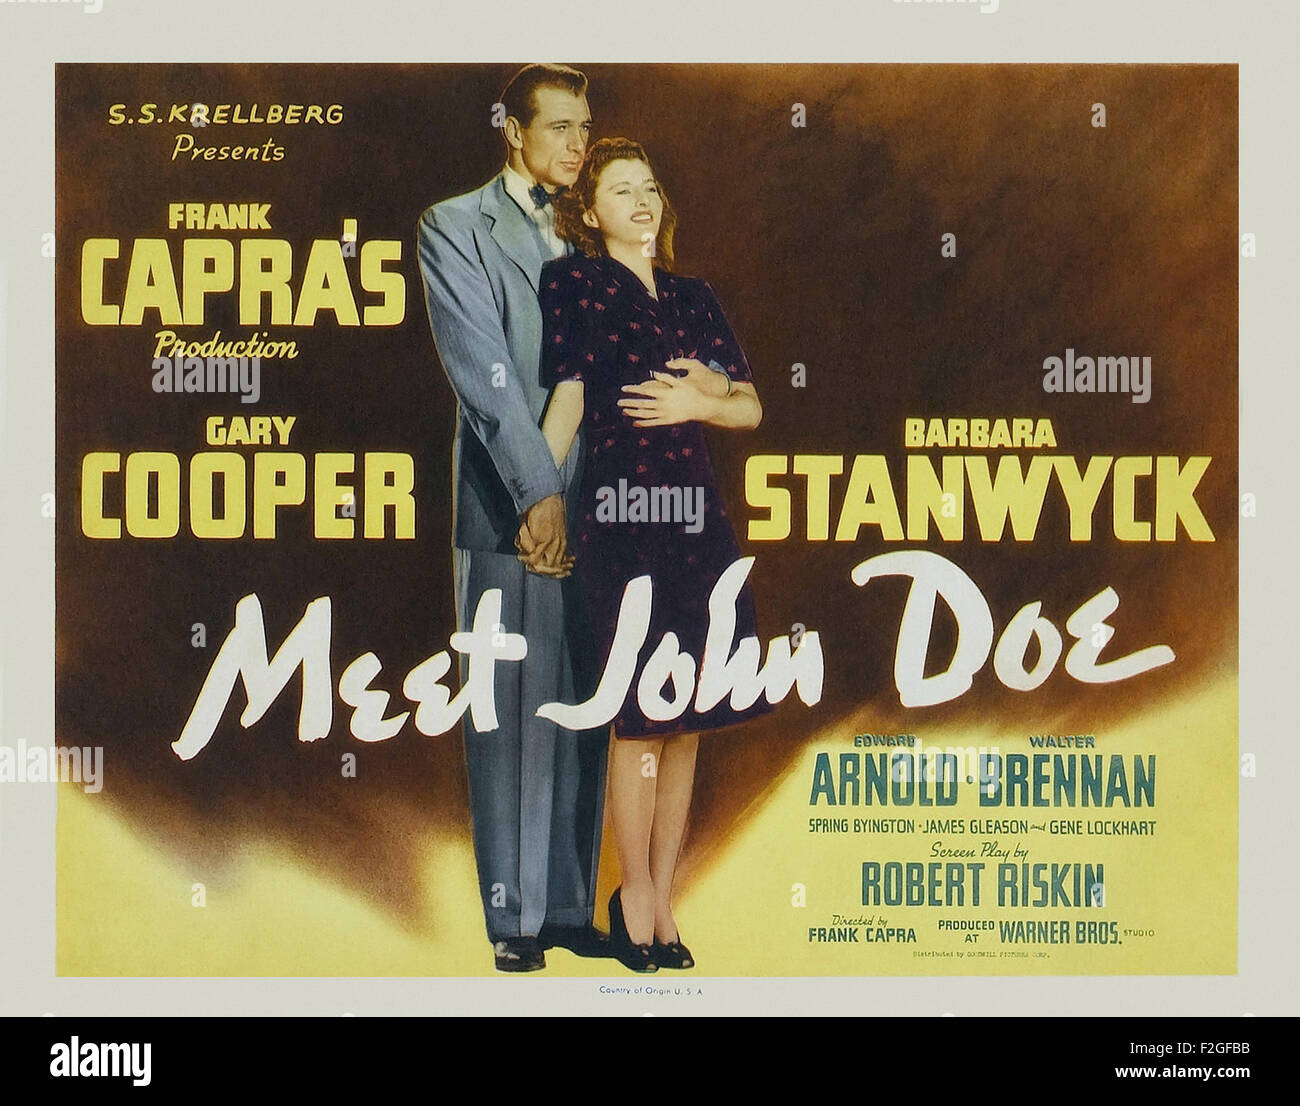 Meet John Doe 02 - Movie Poster Stock Photo